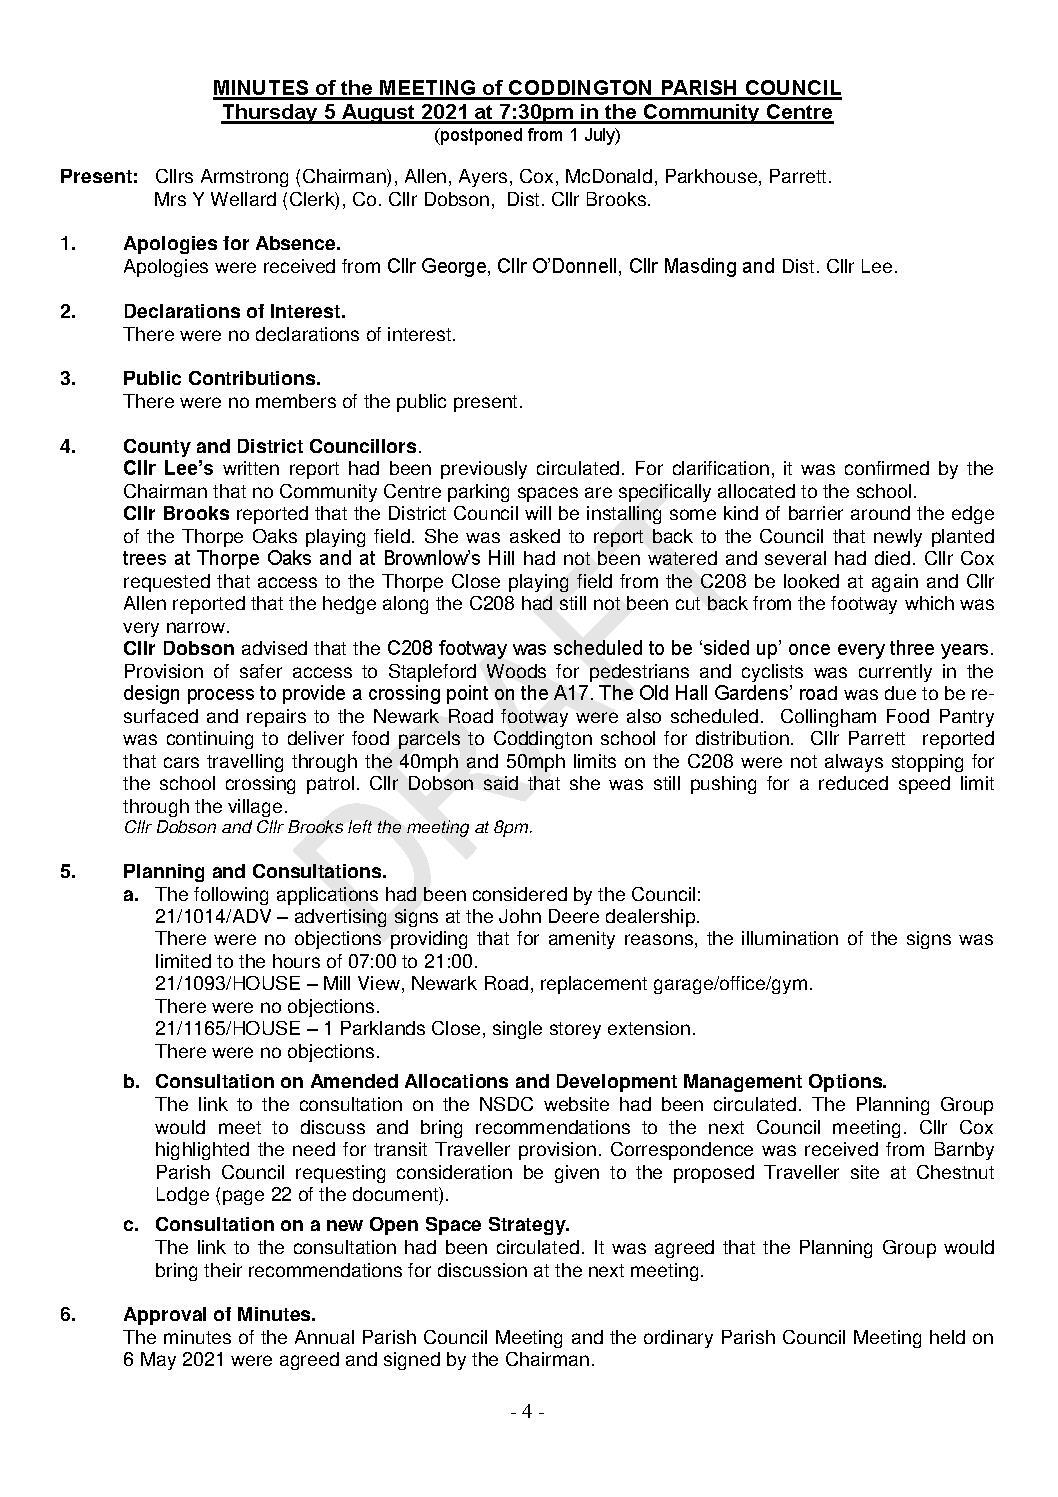 Parish Council Meeting 5 August 2021 Minutes